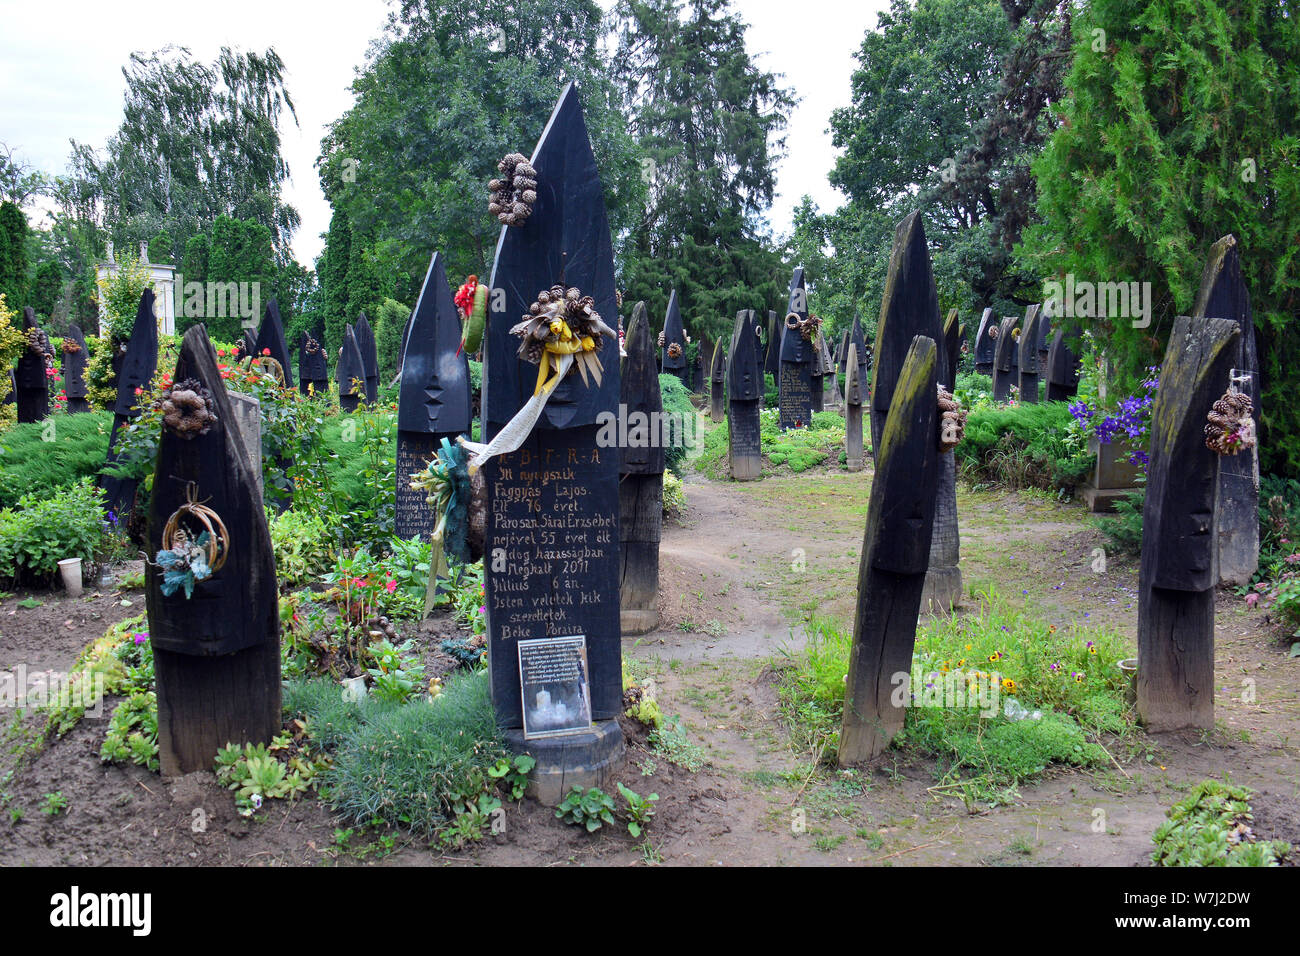 Wooden boat shaped headstones on the cemetery, Szatmárcseke, Hungary, Magyarország, Europe Stock Photo